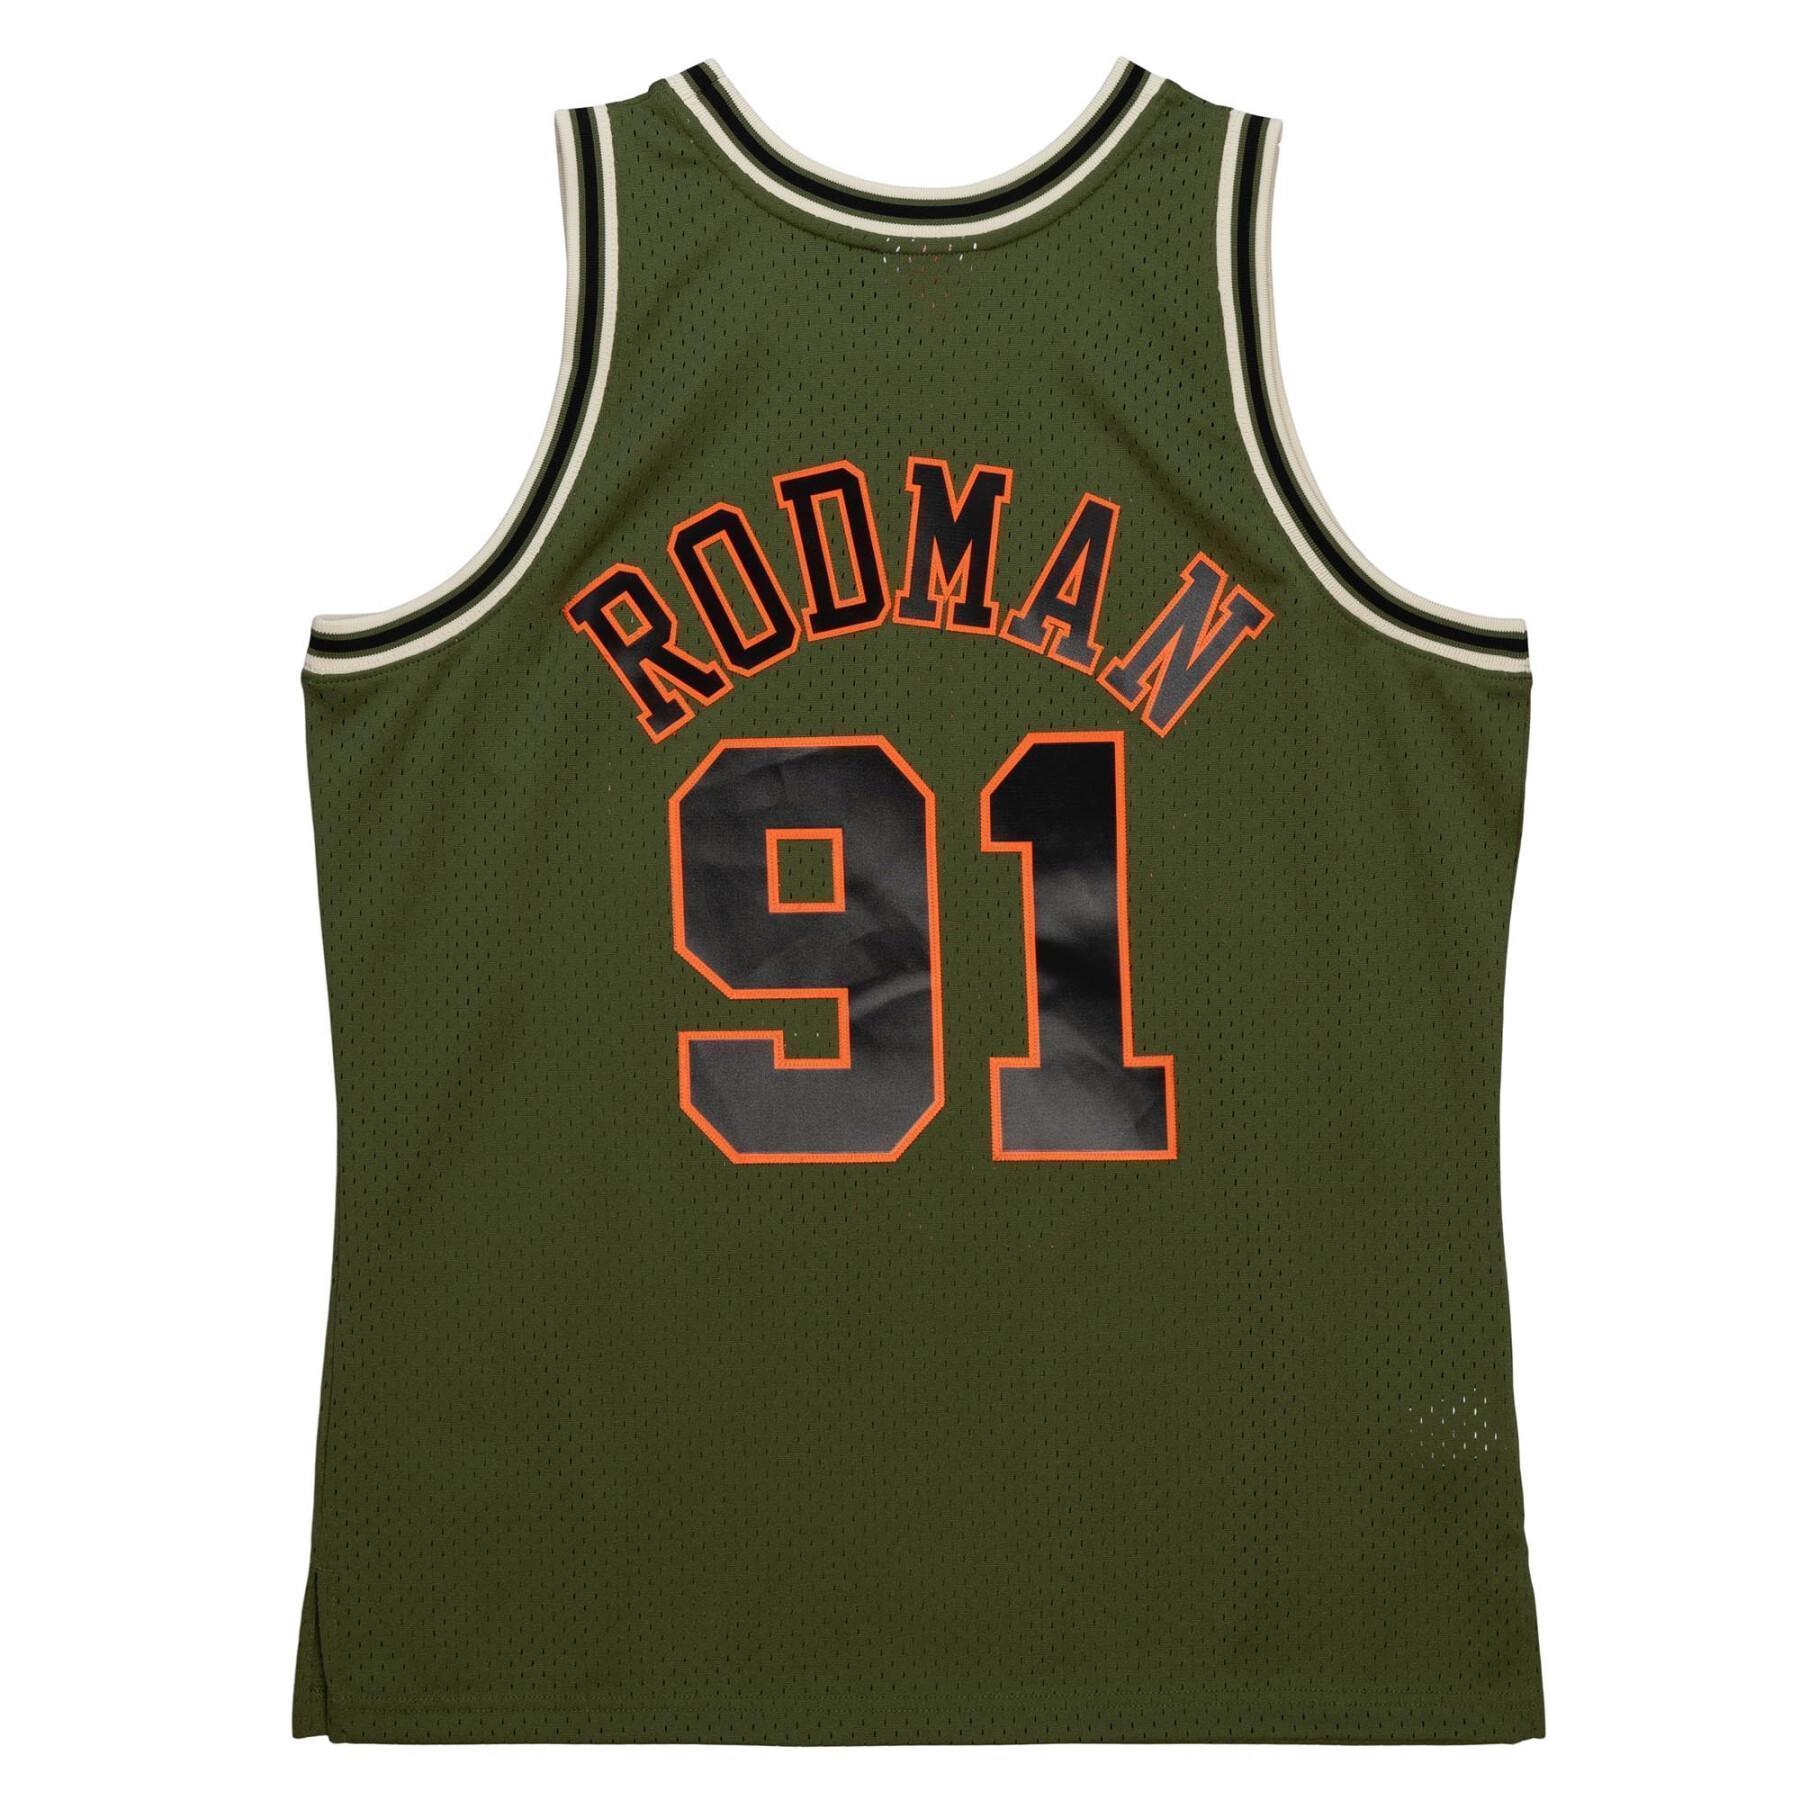 Maglia Chicago Bulls Dennis Rodman 1997/98